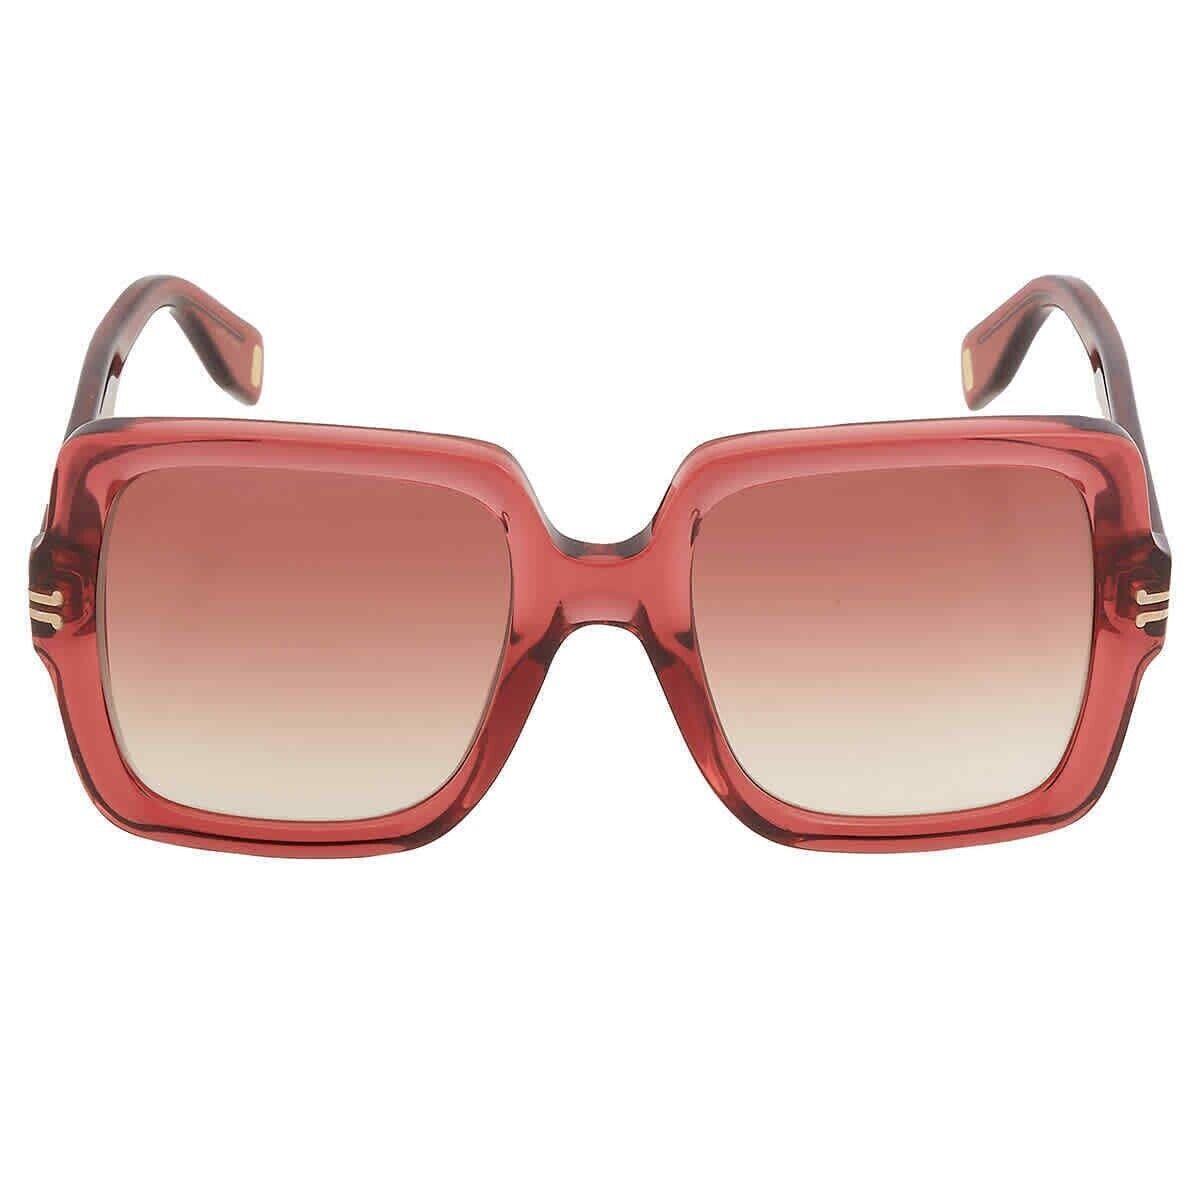 Marc Jacobs 1034/s Lhf 51mm Burgundy Brown Gradient Women Square Sunglasses - Pink Frame, Brown gradient Lens